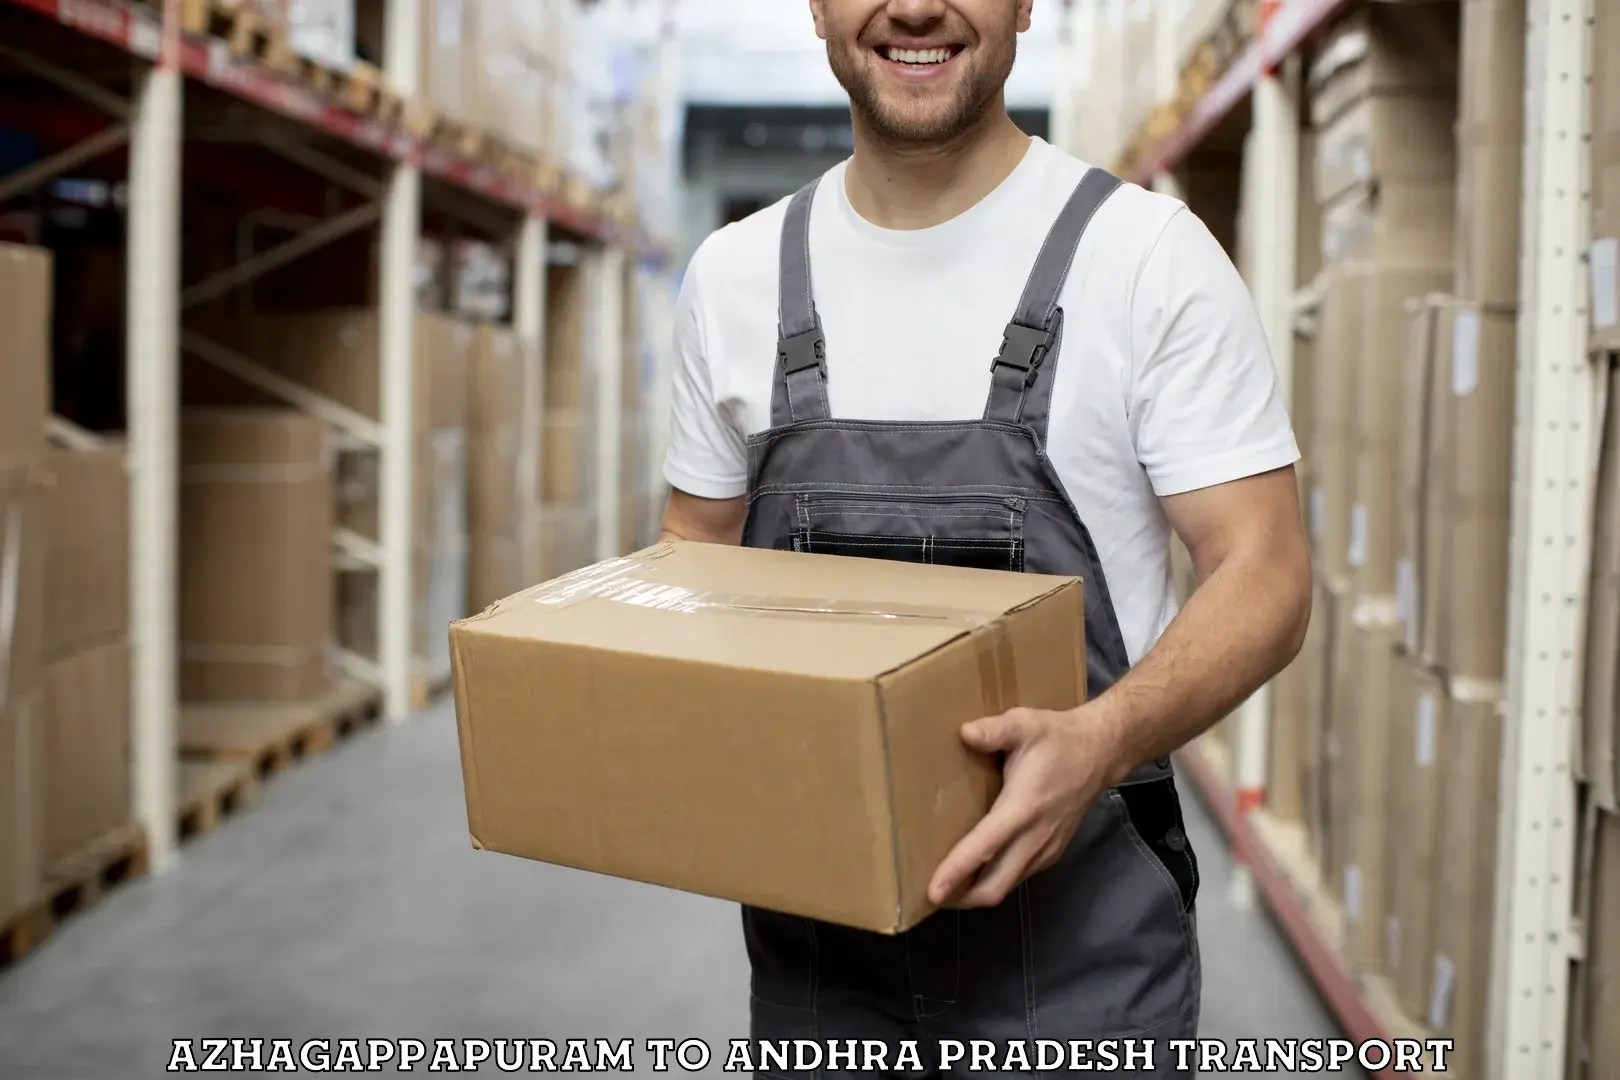 Goods delivery service Azhagappapuram to Andhra Pradesh